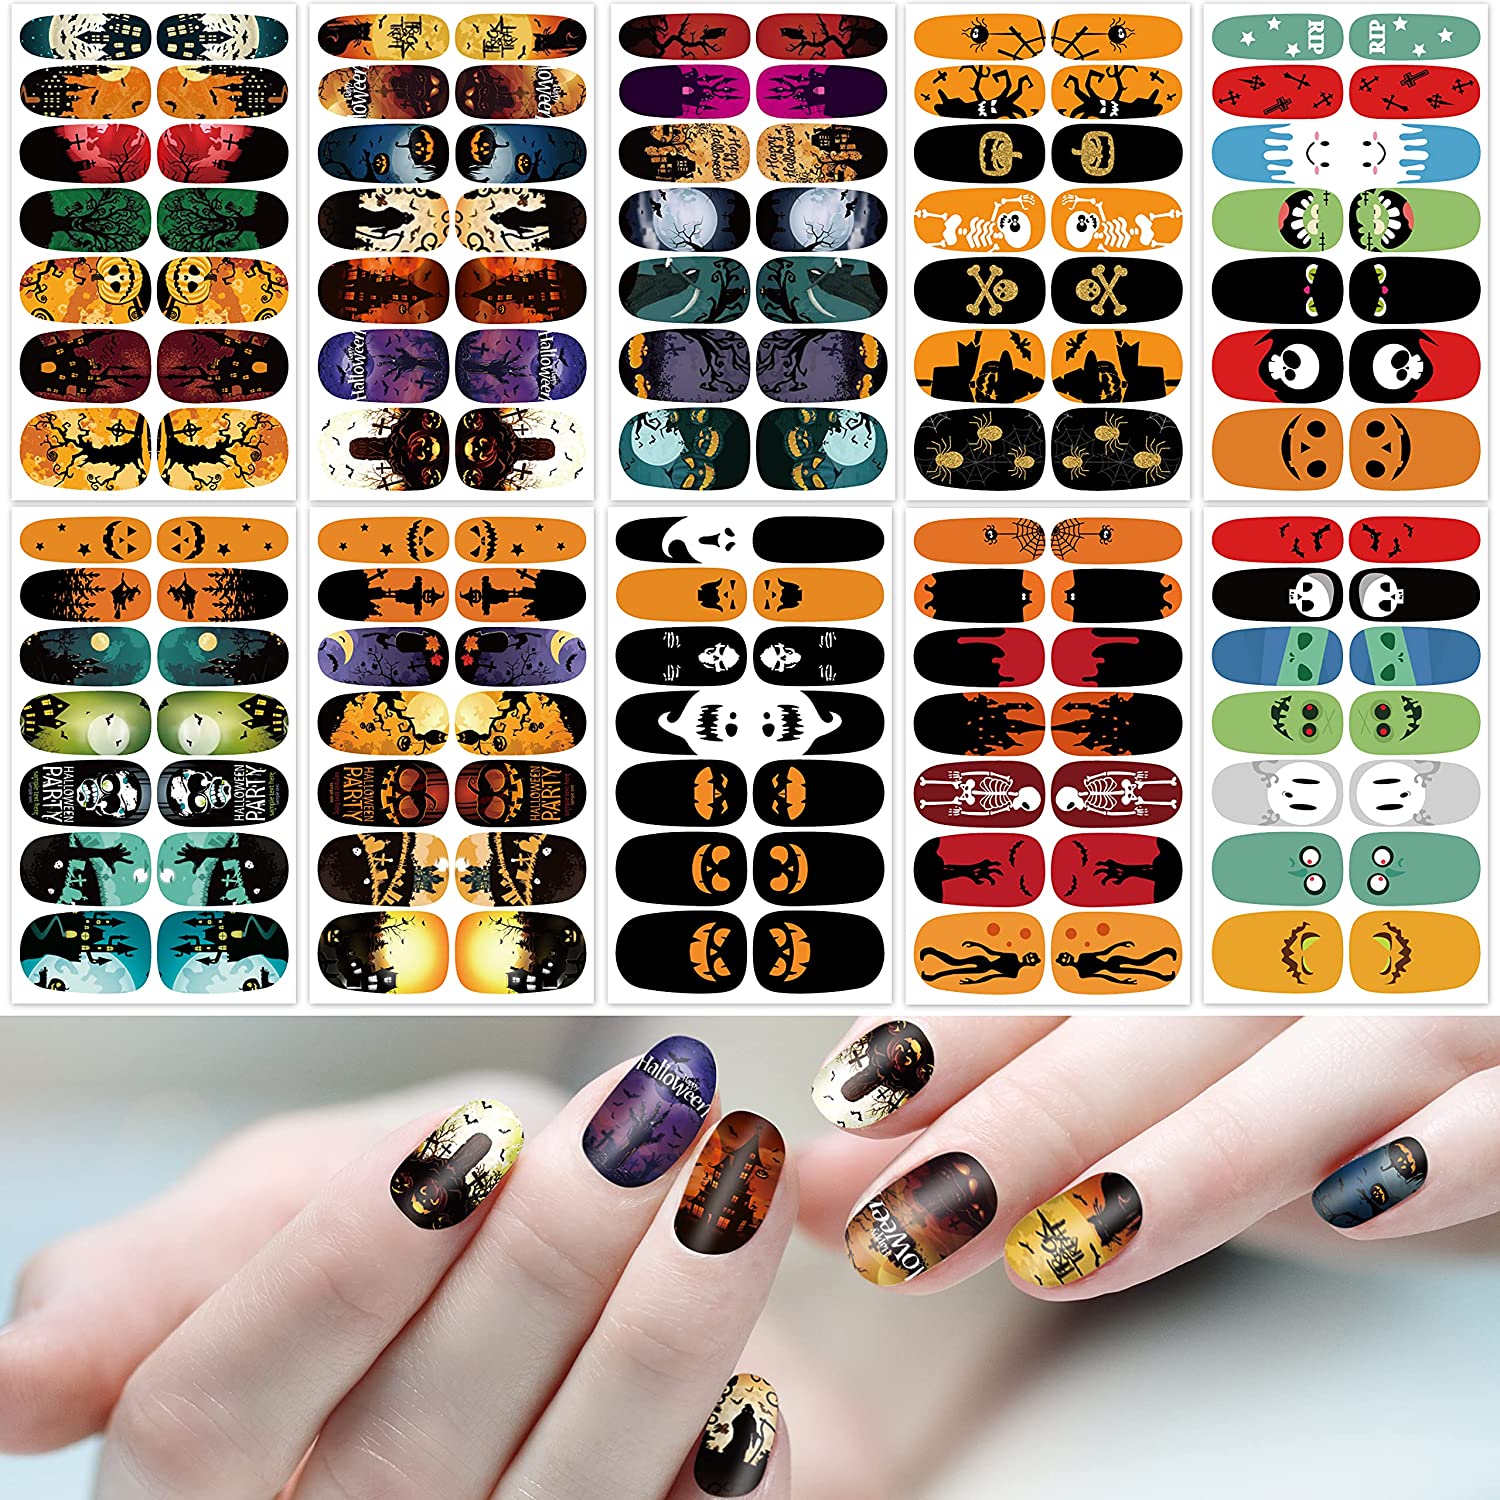 TailaiMei Summer Nail Decals Stickers, 1500+ Pcs Self-Adhesive Tips DIY Nail Art Design Stencil (12 Large Sheets)